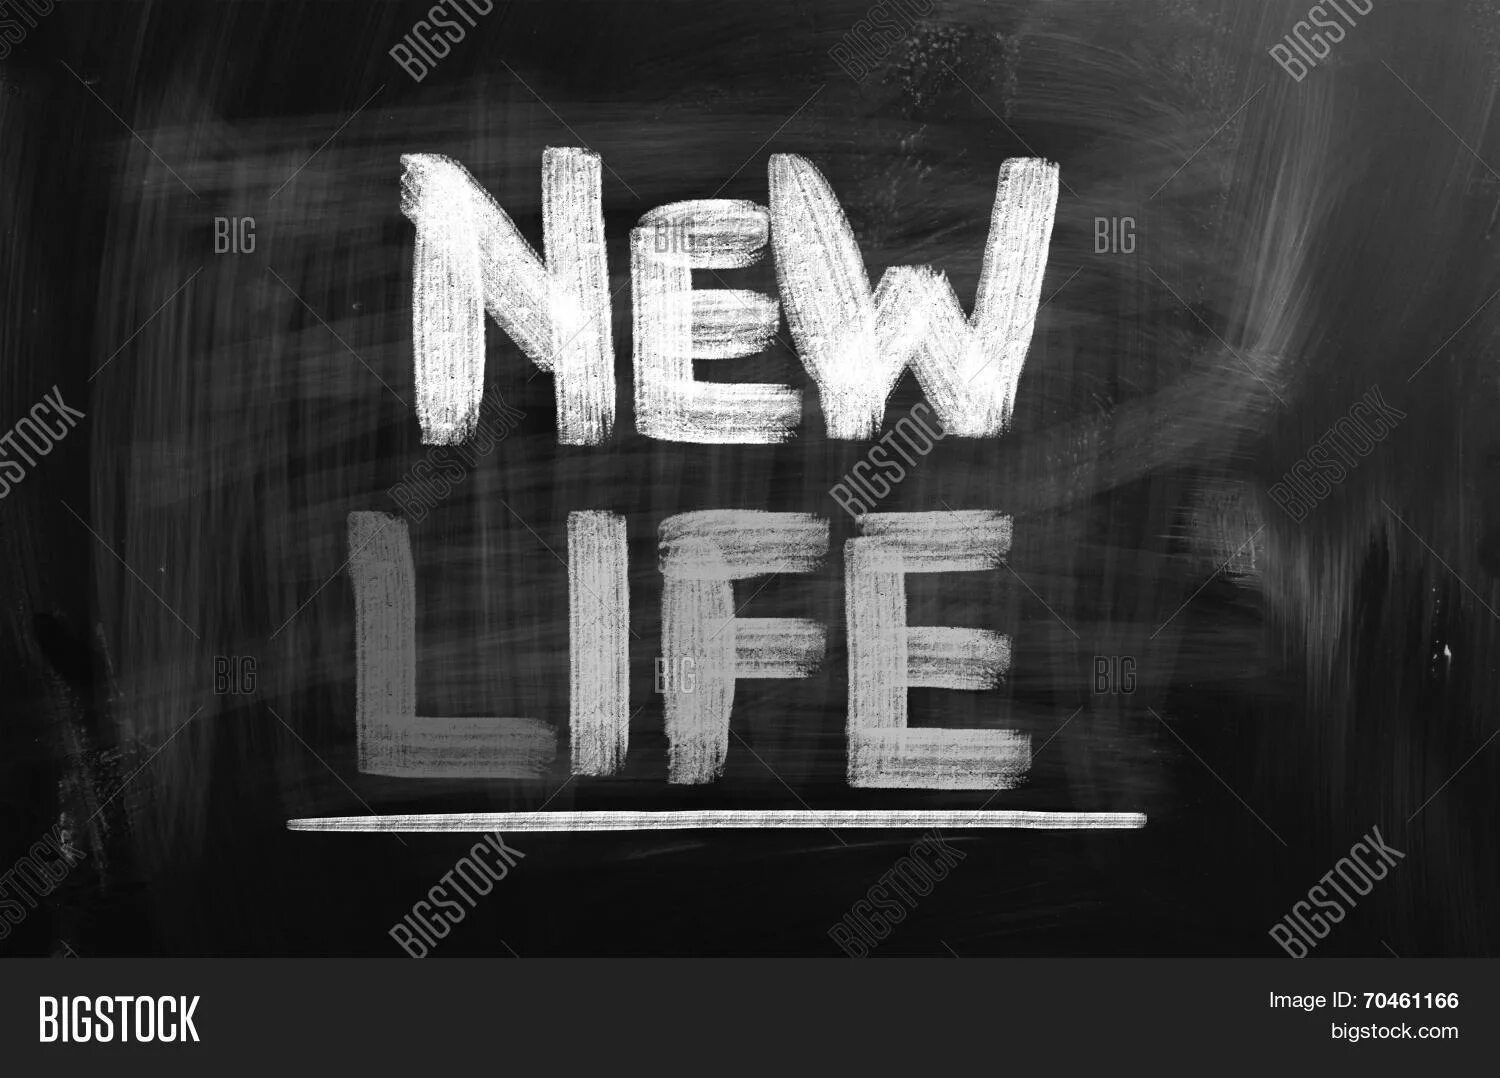 Start new life. The New Life. Картинки лайф Нью. Happy New Life картинки. Надписью New Life фото.